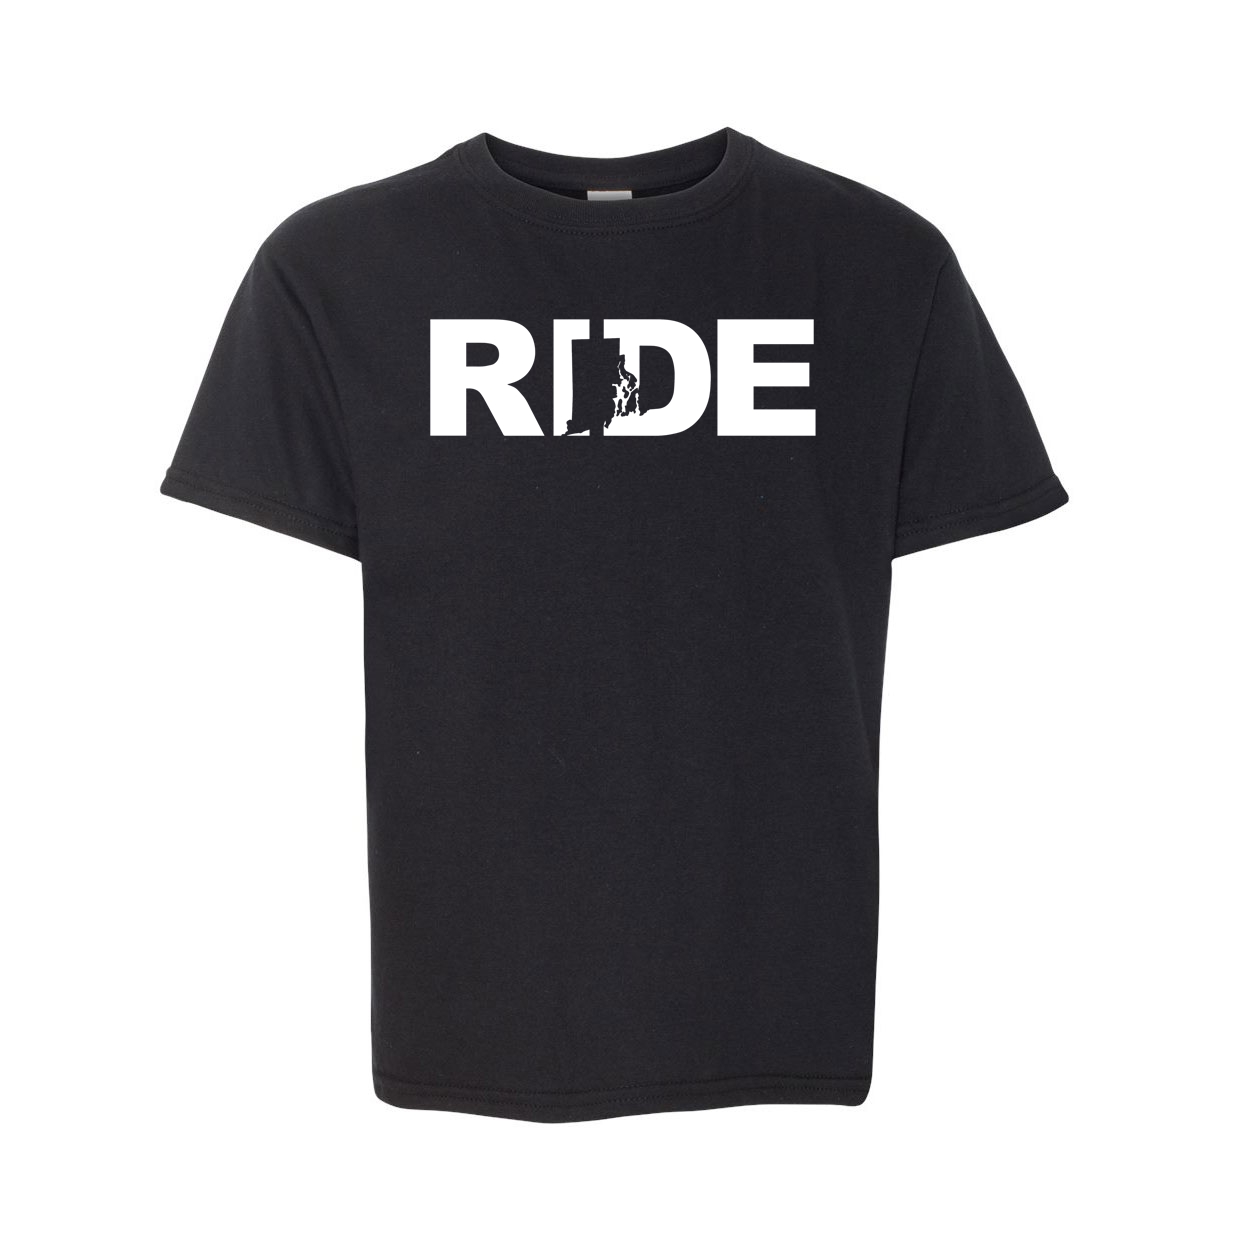 Ride Rhode Island Classic Youth T-Shirt Black (White Logo)